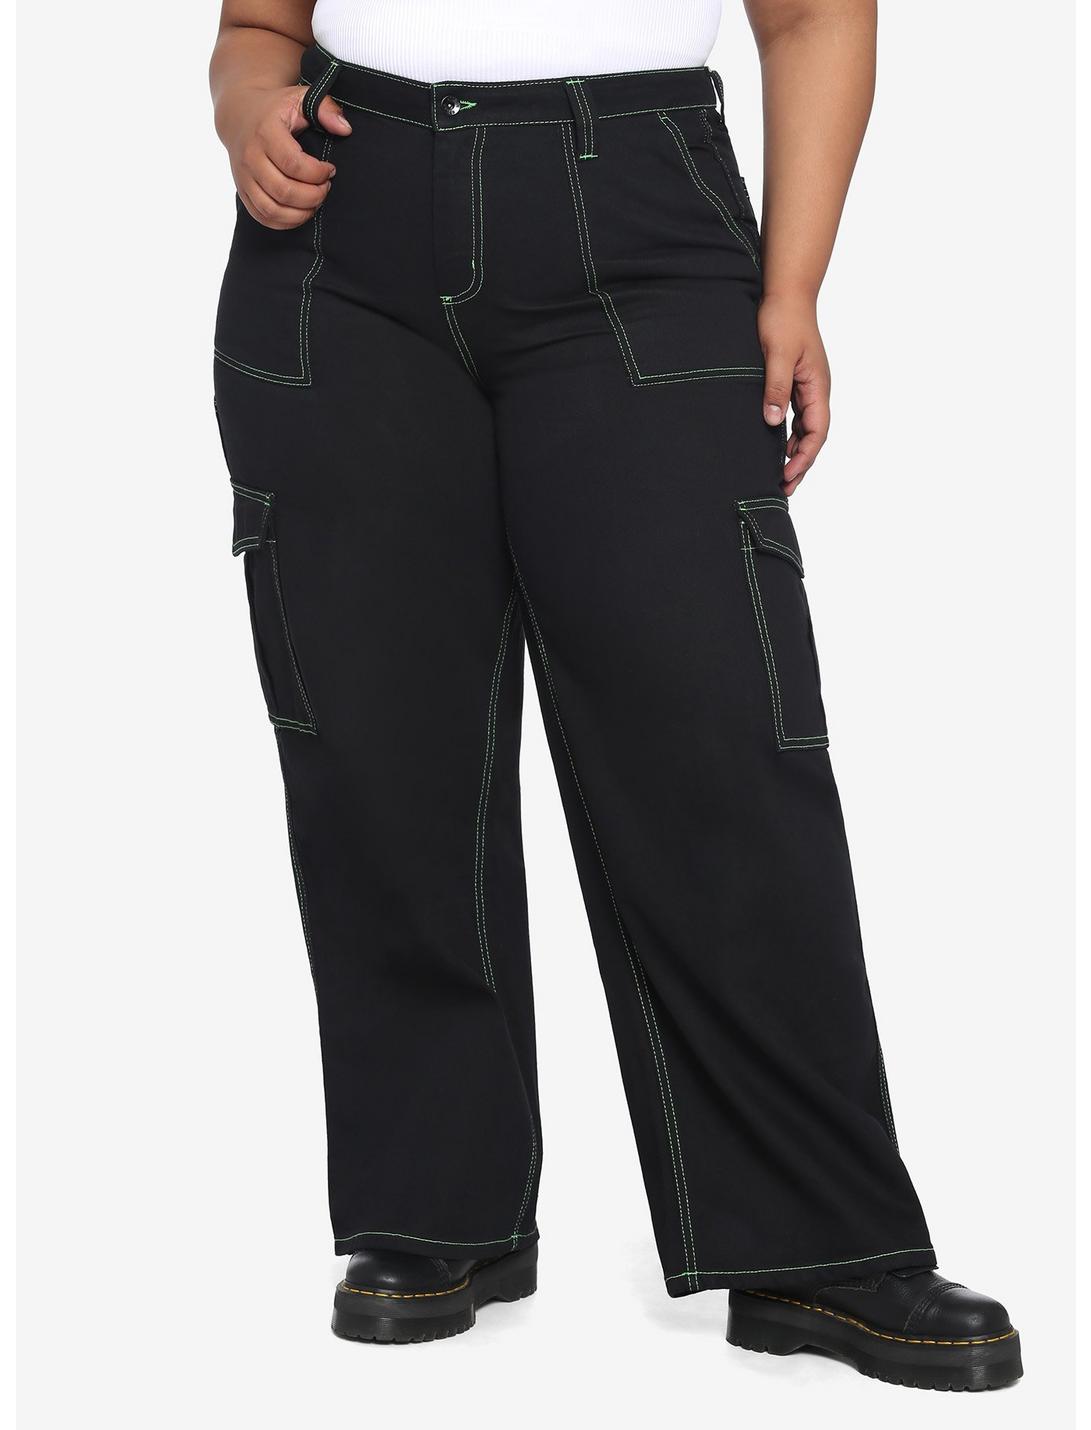 HT Denim Black & Green Stitch Hi-Rise Carpenter Pants Plus Size, BLACK, hi-res